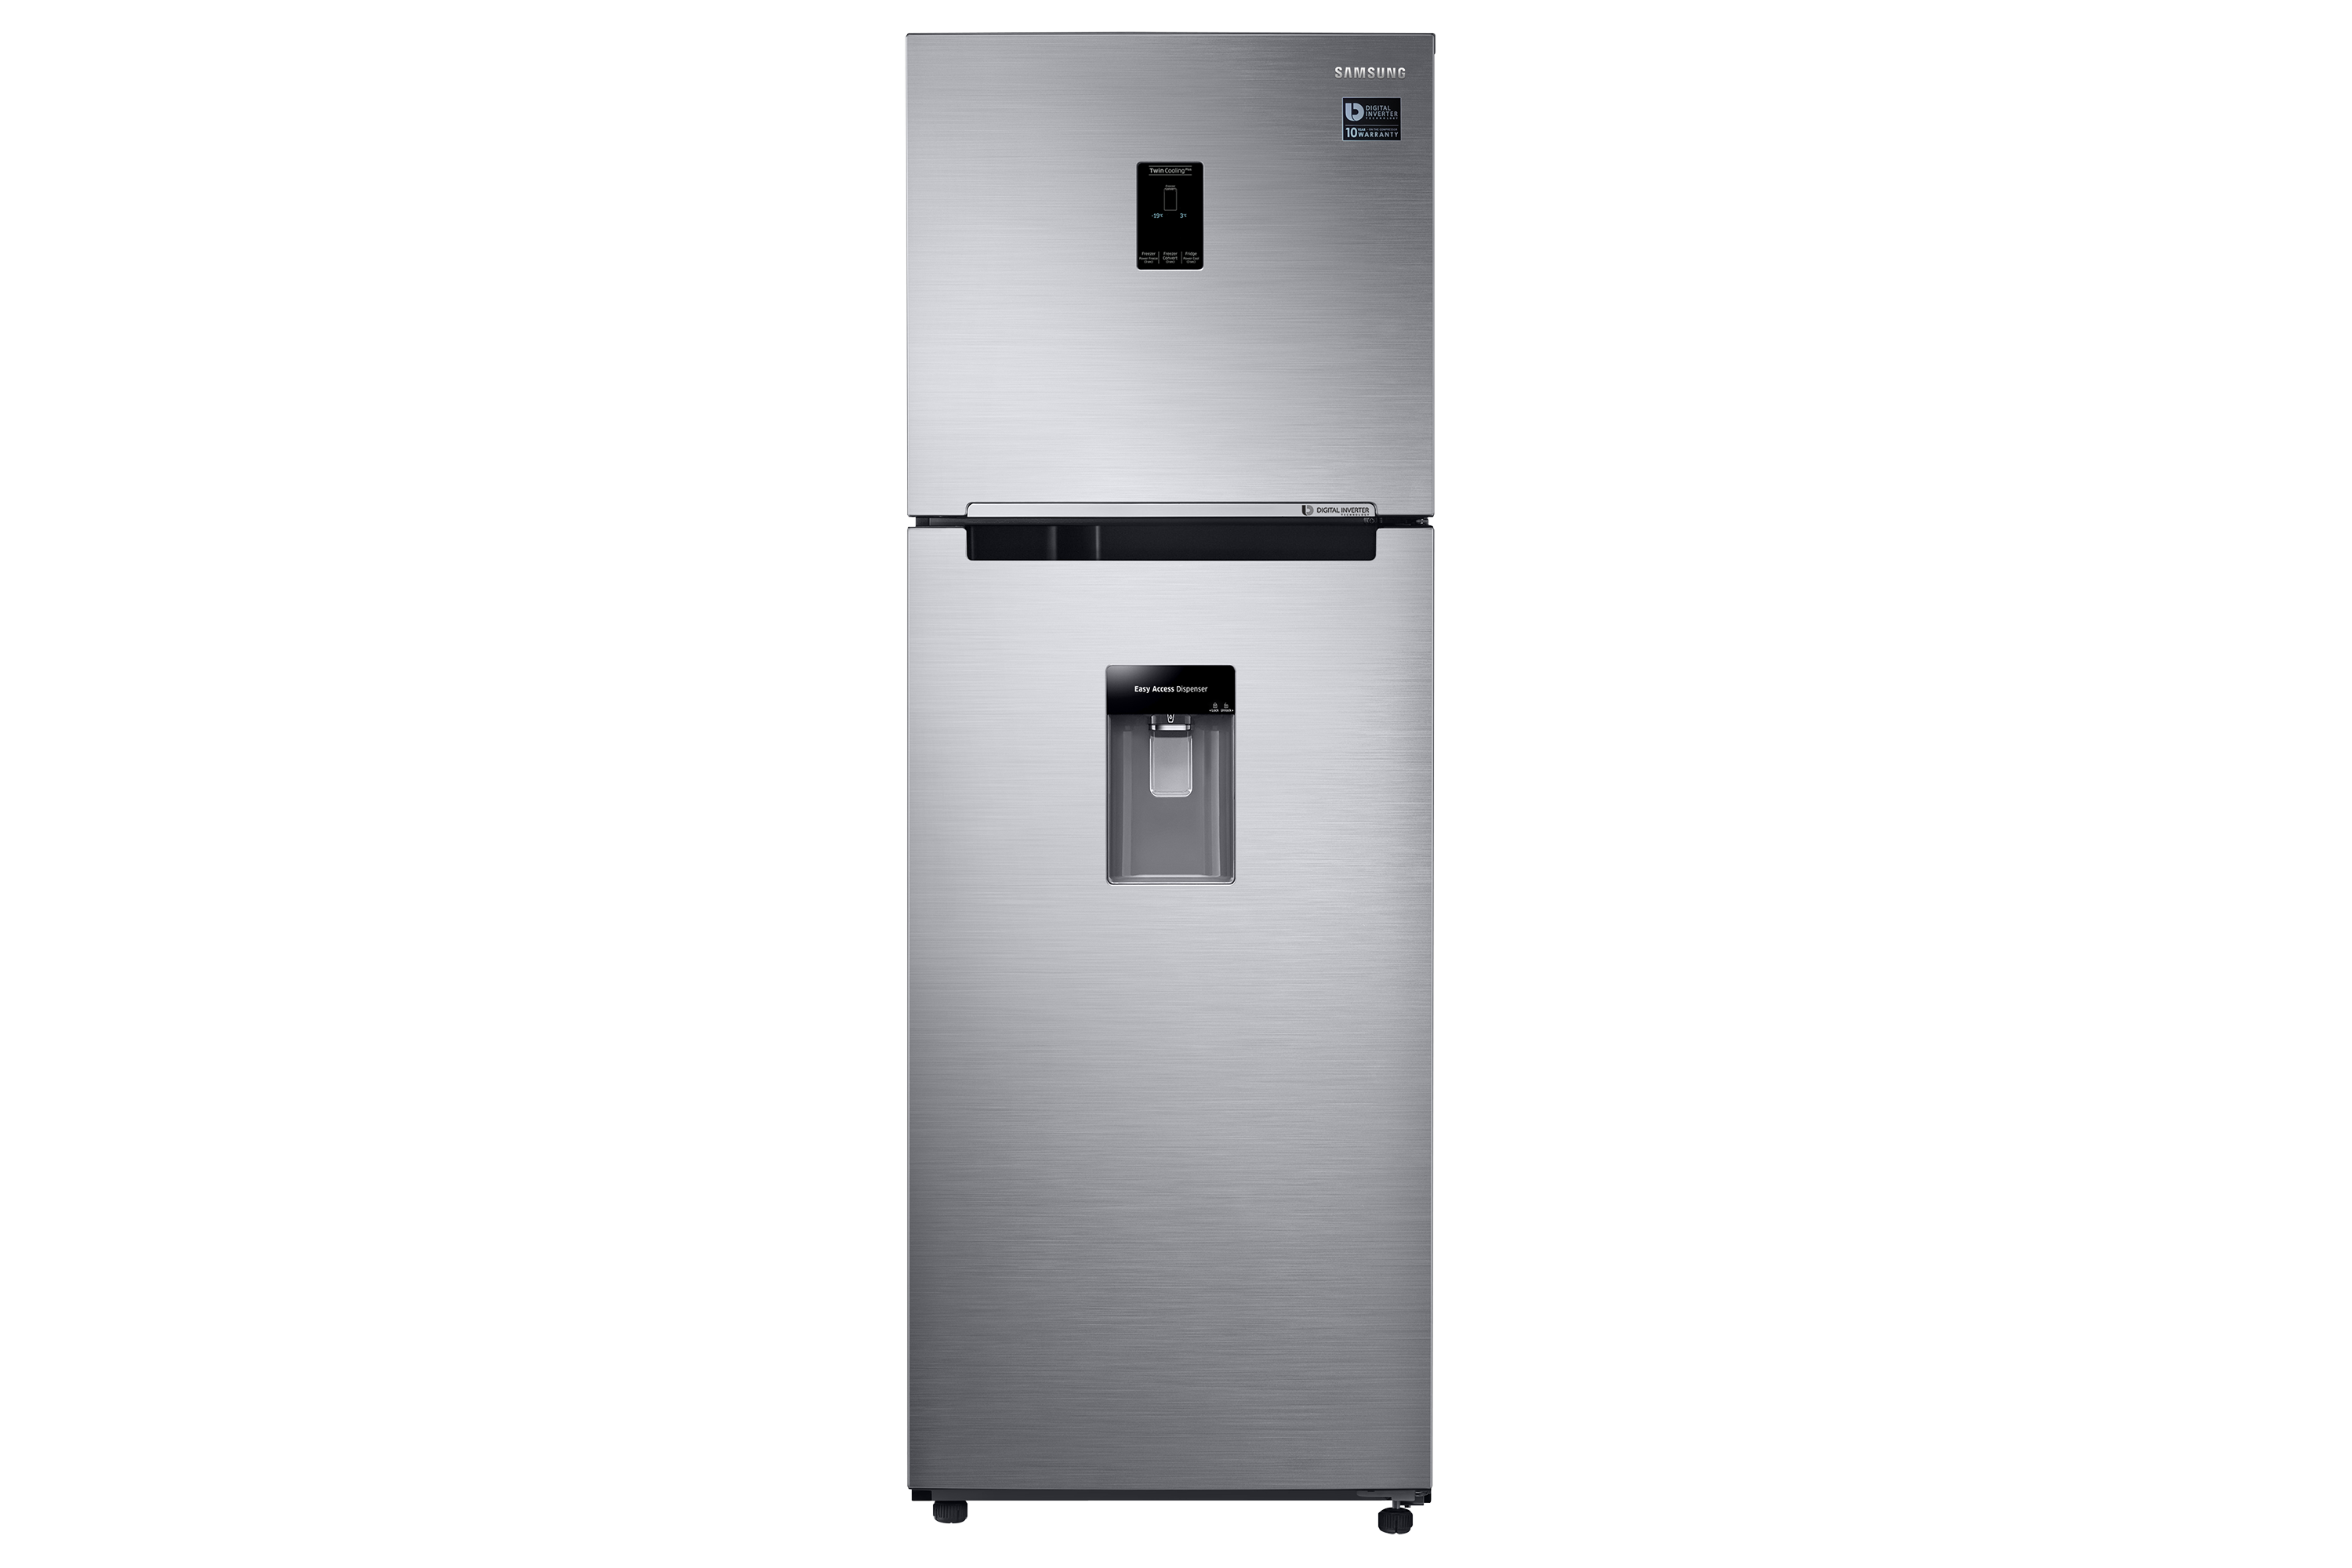 Tủ lạnh hai cửa Samsung Twin Cooling Plus 327L (RT32K5932S8)